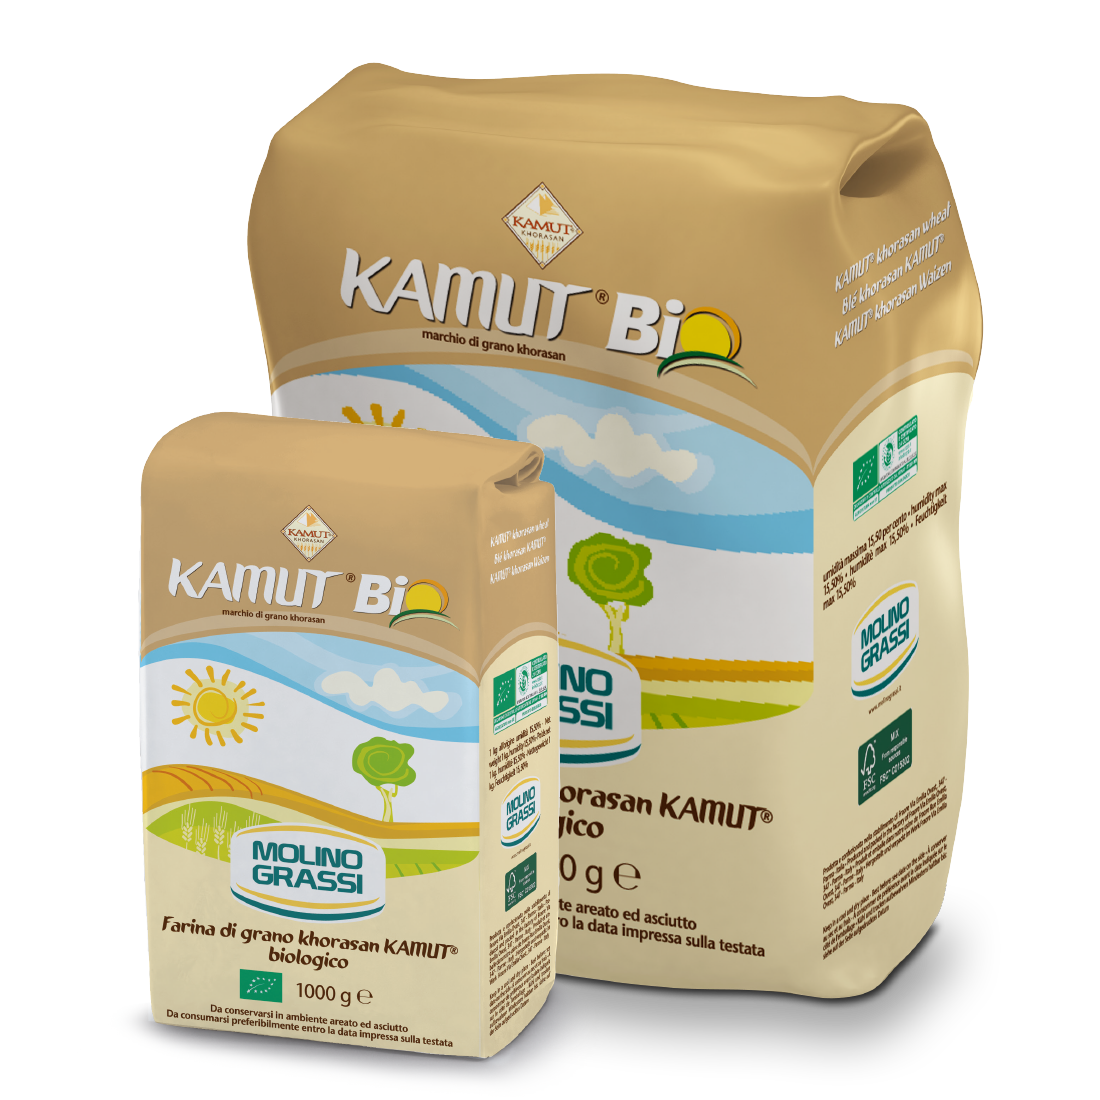 Farina di grano Khorasan Kamut® Bio